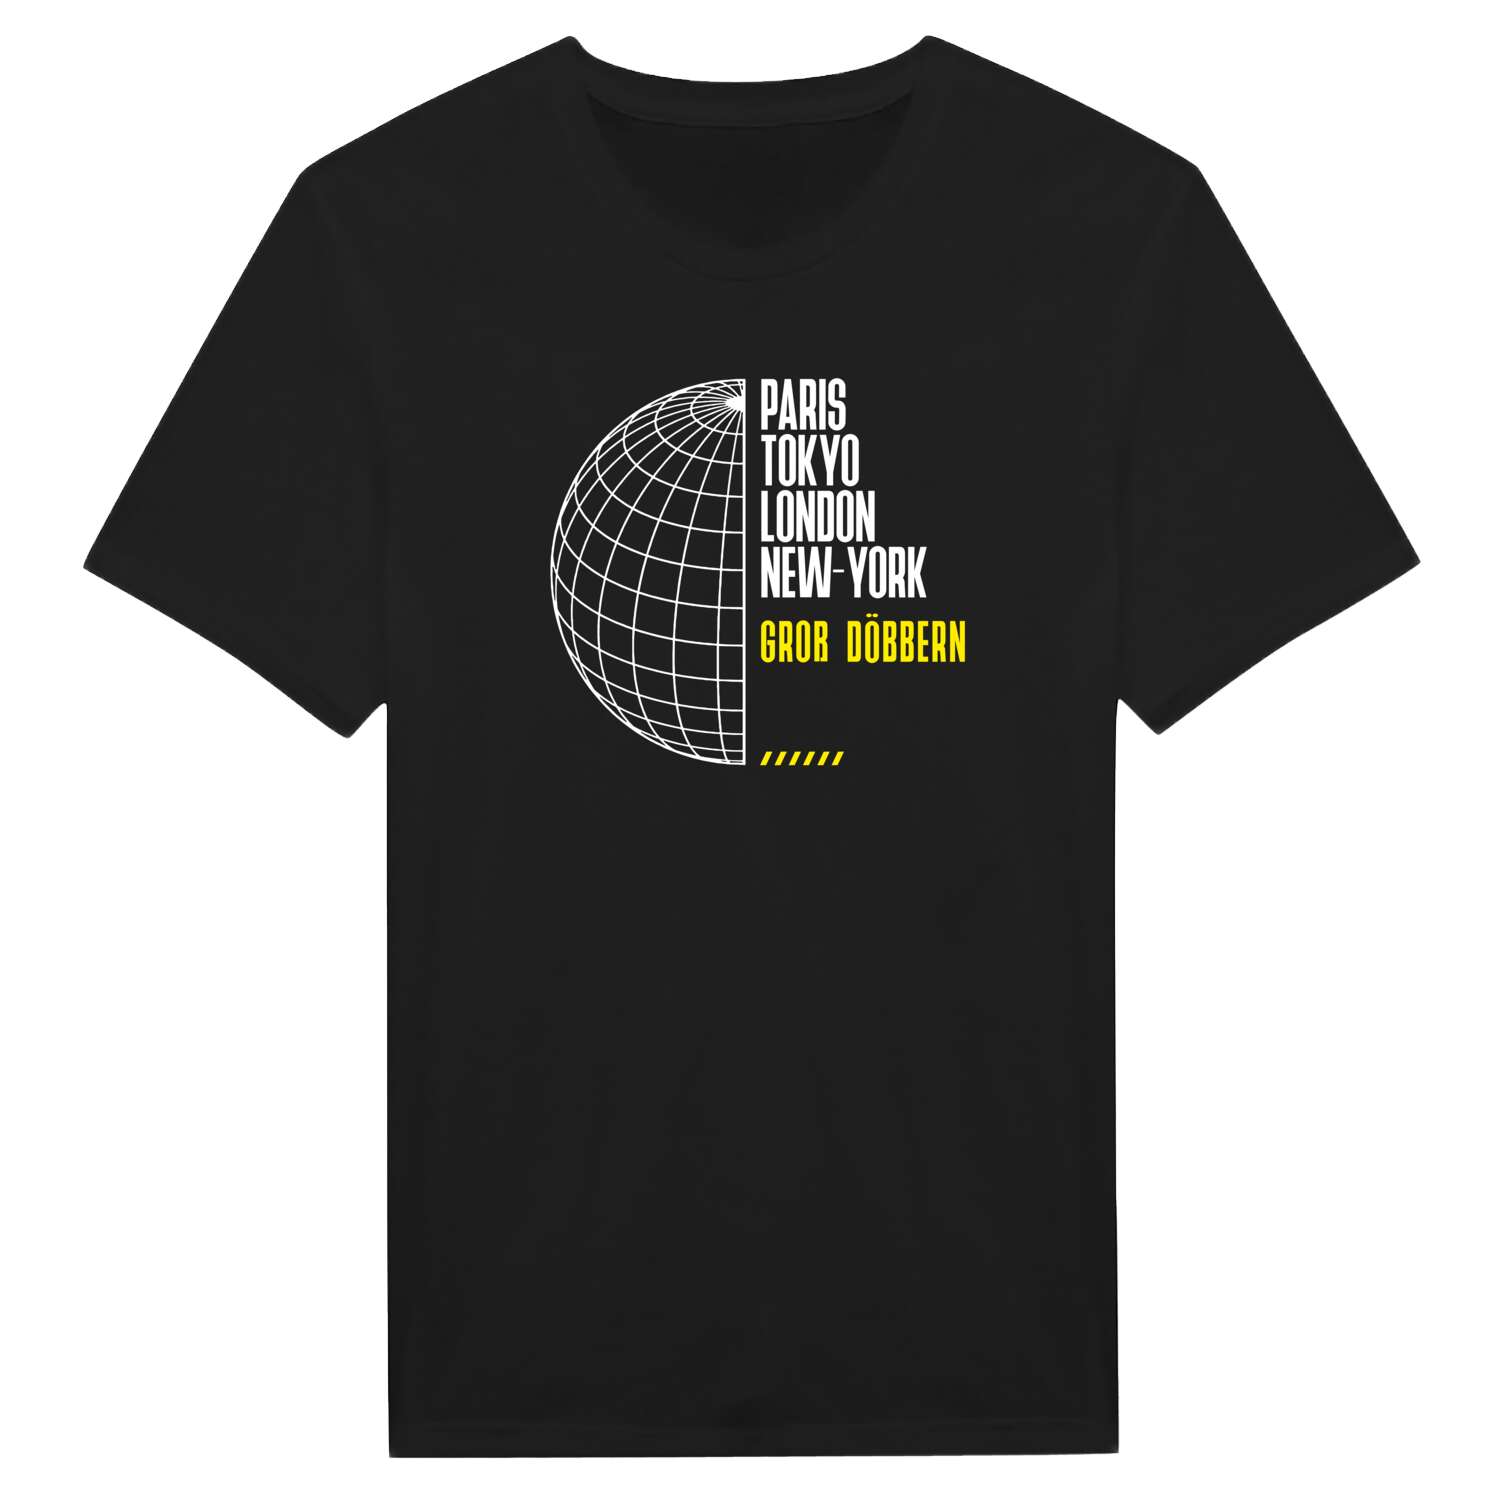 Groß Döbbern T-Shirt »Paris Tokyo London«